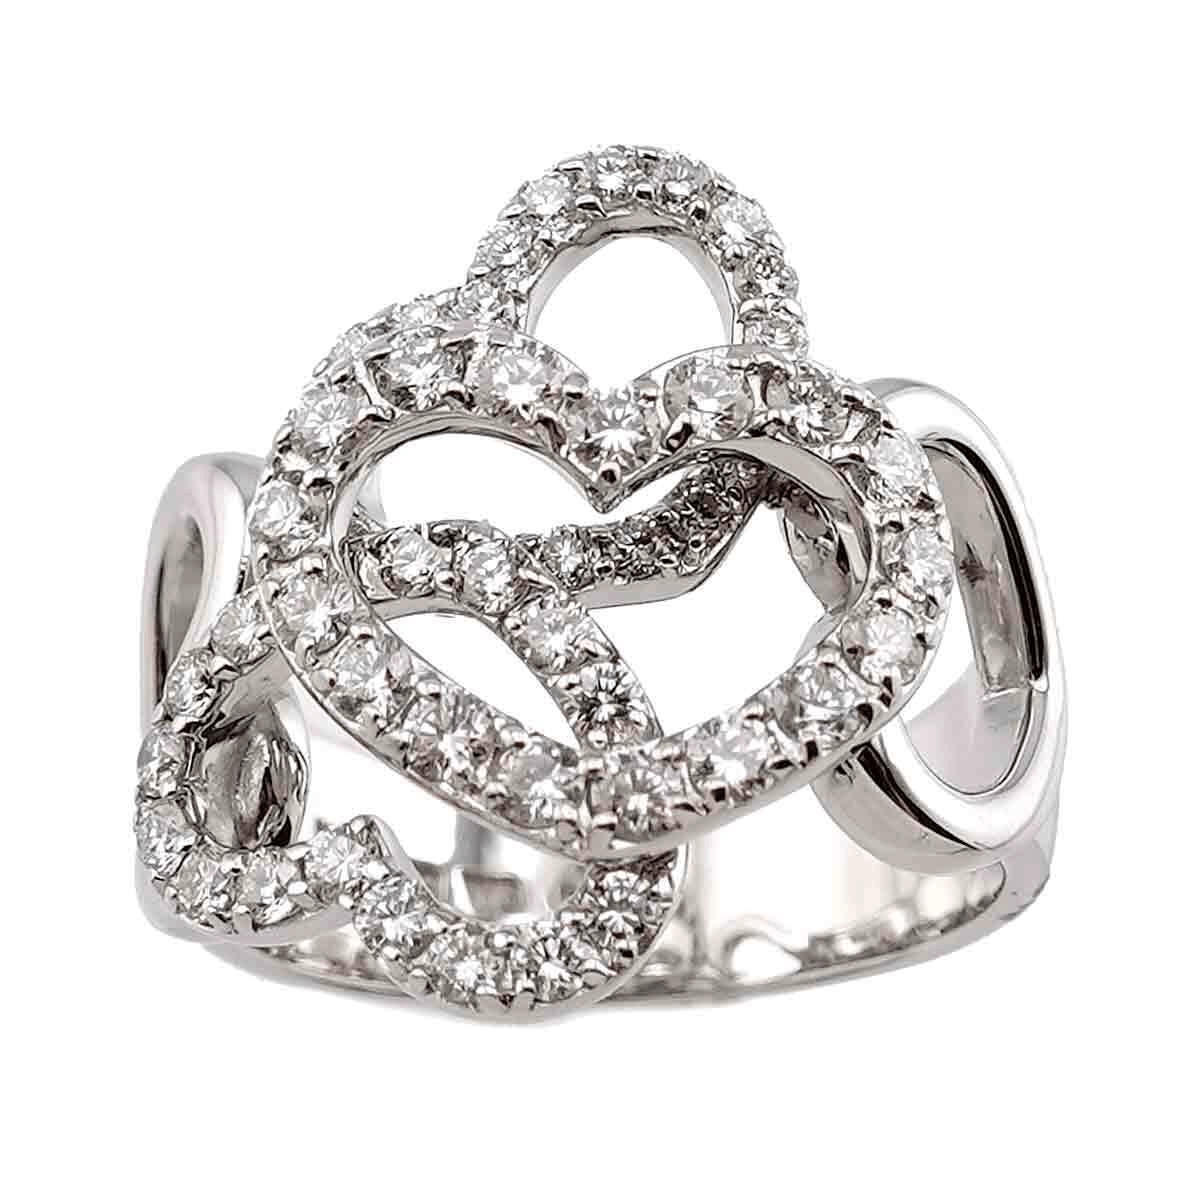 Luxury Promise Ponte Vecchio Diamond 0.80ct Ring 18K WG 750 Size5-5.25(US) 90197334